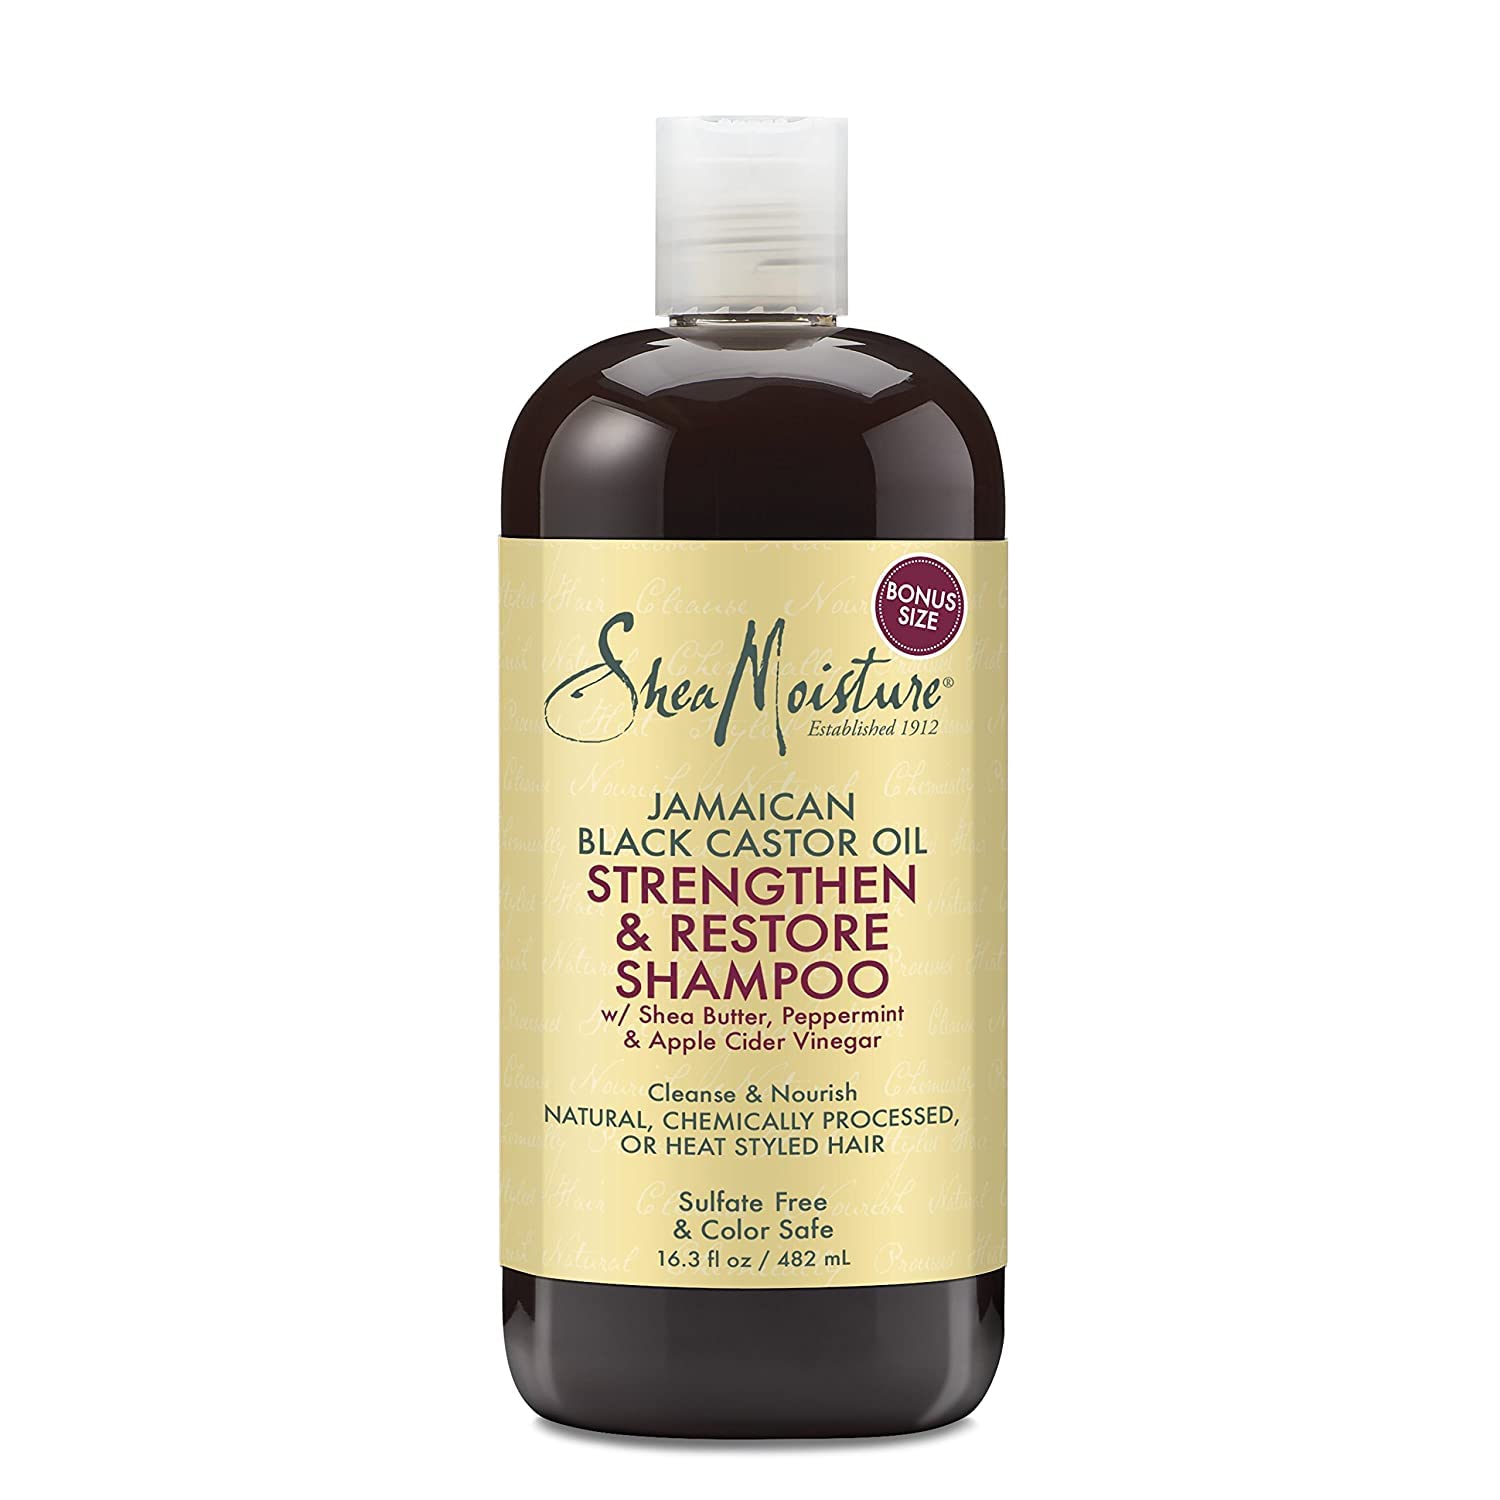 SheaMoisture Jamaican Black Castor Oil Replenishing Shampoo, best shampoo for natural hair 4c